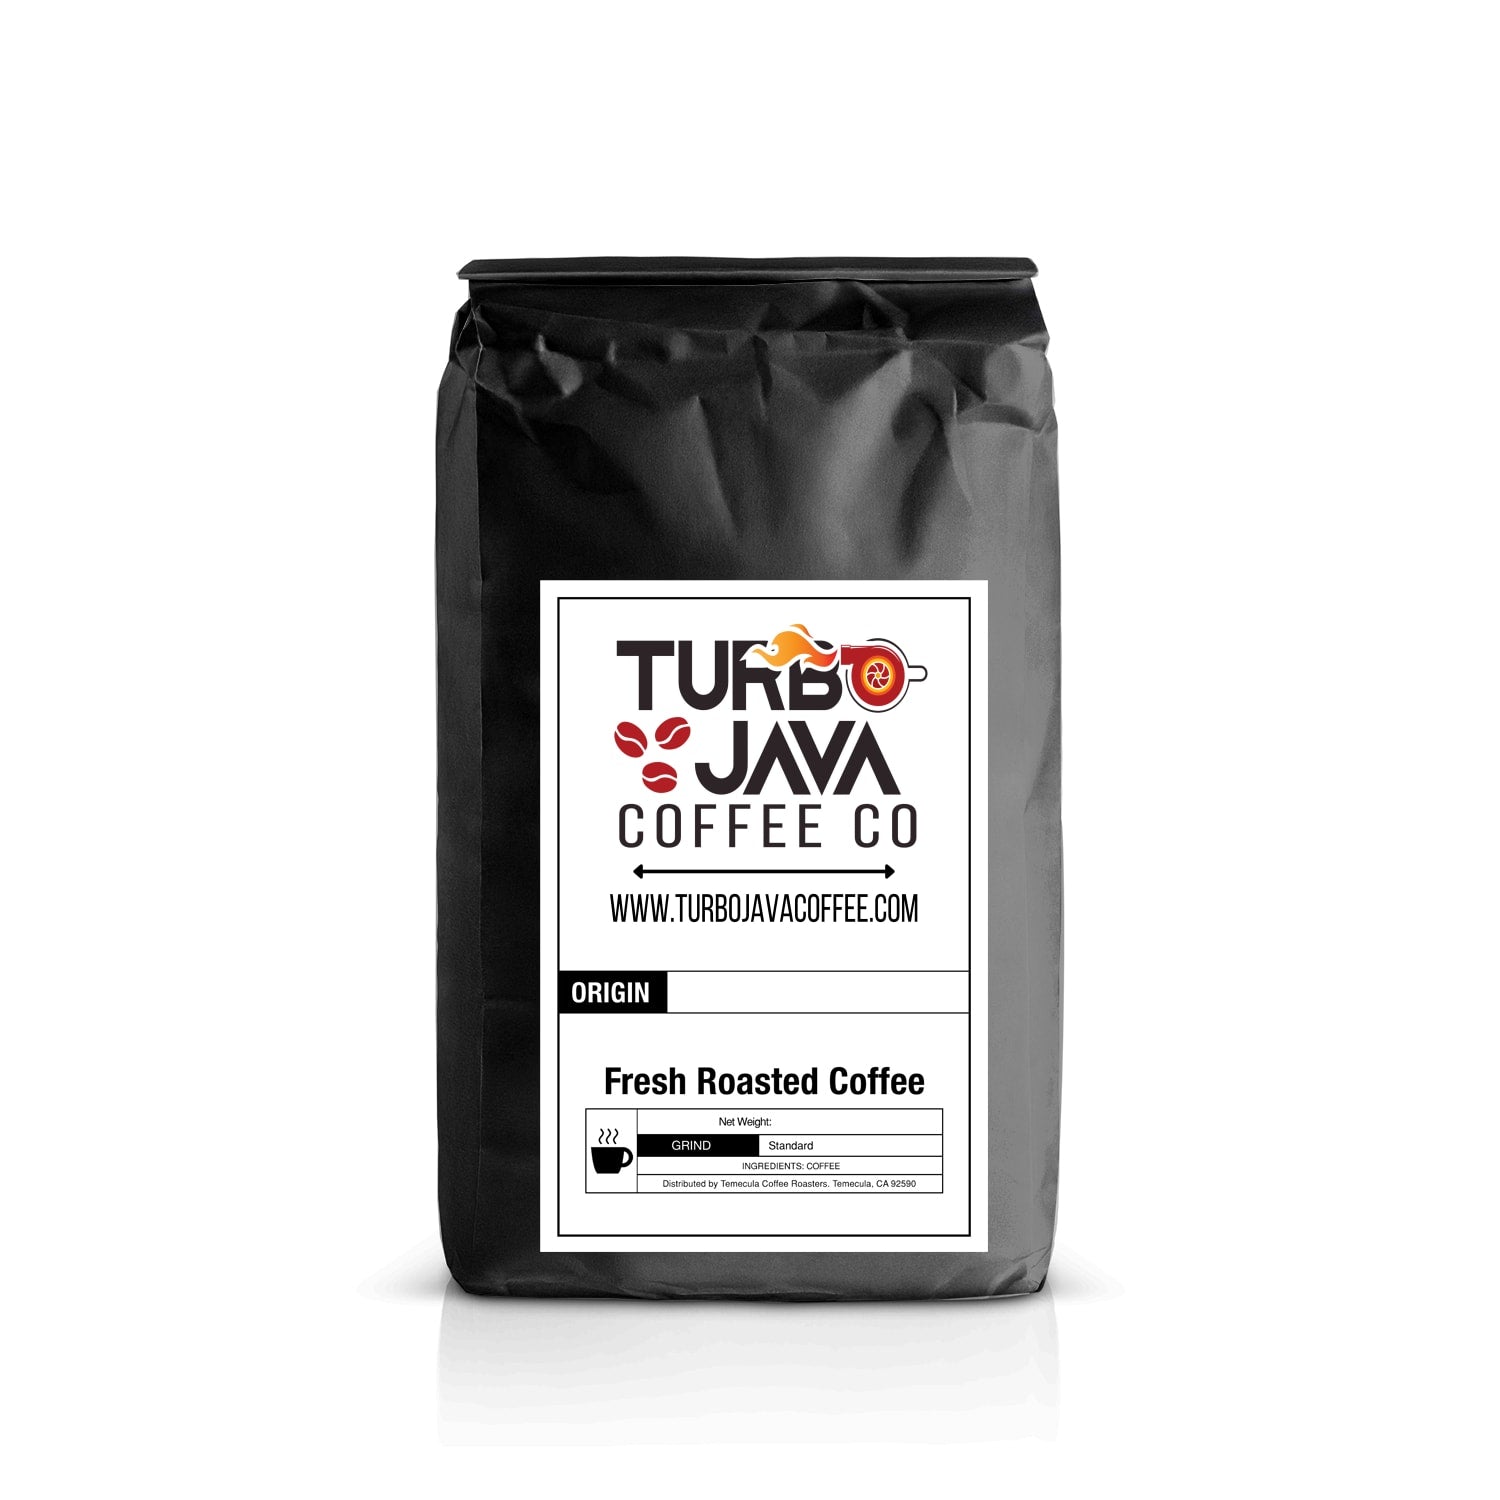 Turbo Java Coffee Co. Pumpkin Spice Coffee 12 oz / Standard,12 oz / Coarse,12 oz / Espresso,12 oz / Whole Bean,1 lb / Standard,1 lb / Coarse,1 lb / Espresso,1 lb / Whole Bean,2 lb / Standard,2 lb / Coarse,2 lb / Espresso,2 lb / Whole Bean,5 lb / Standard,5 lb / Coarse,5 lb / Espresso,5 lb / Whole Bean,12 lb / Standard,12 lb / Coarse,12 lb / Espresso,12 lb / Whole Bean